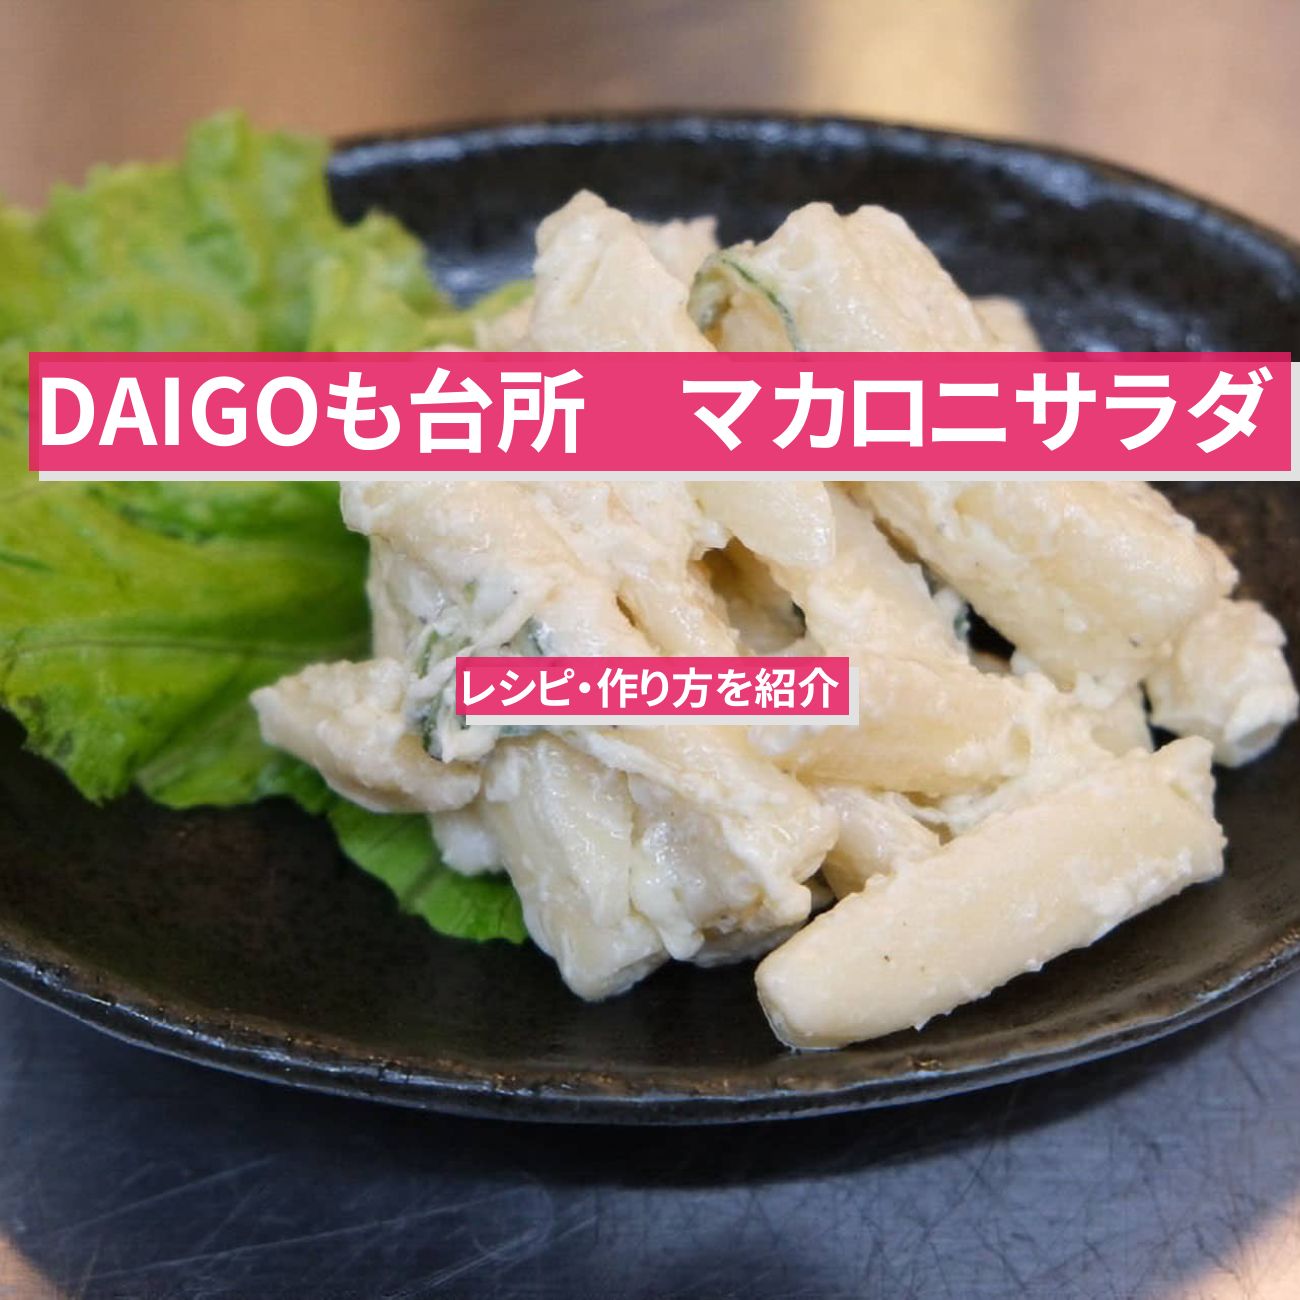 【DAIGOも台所】『マカロニサラダ』のレシピ・作り方を紹介〔ダイゴも台所〕